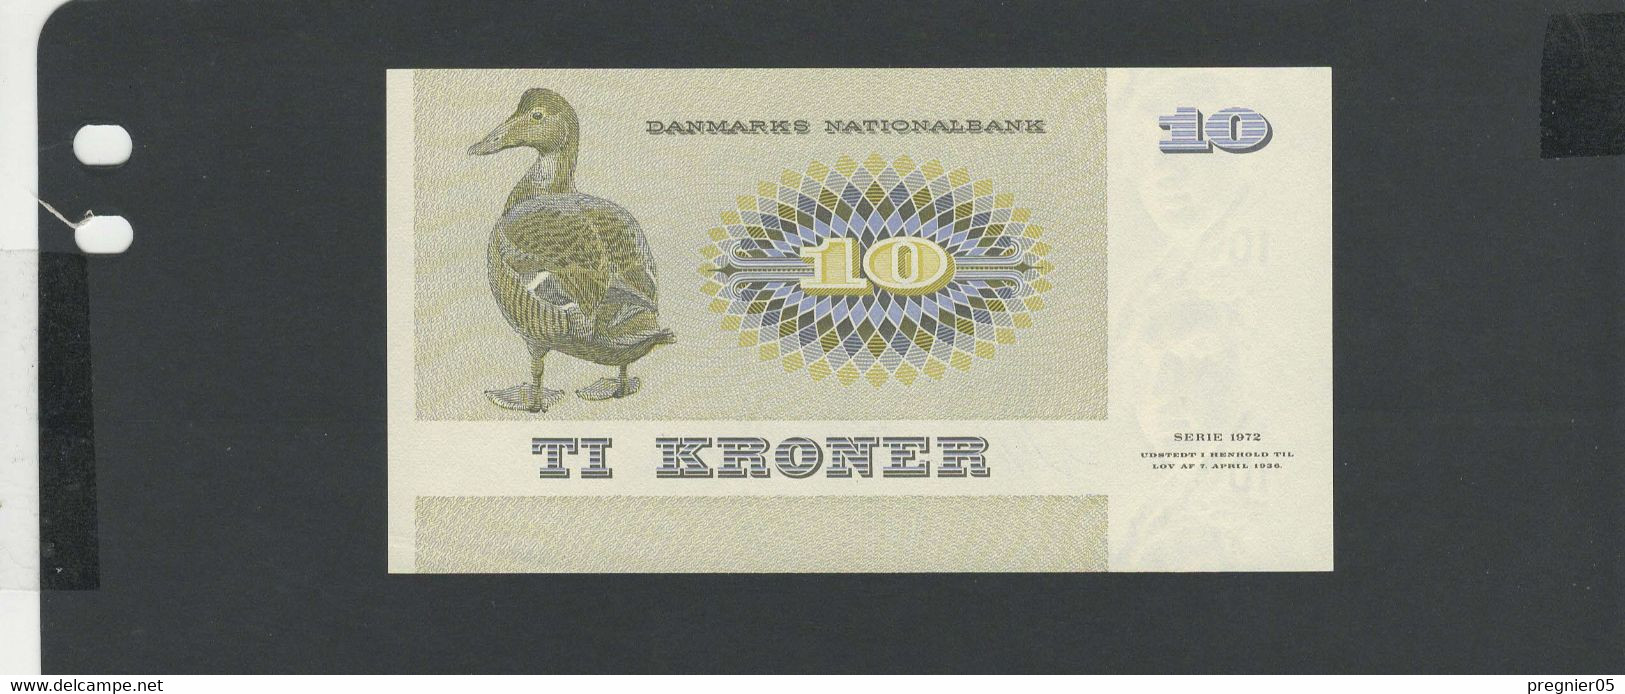 DANEMARK - Billet 10 Kroner 1972 NEUF/UNC Pick-48a - Dinamarca